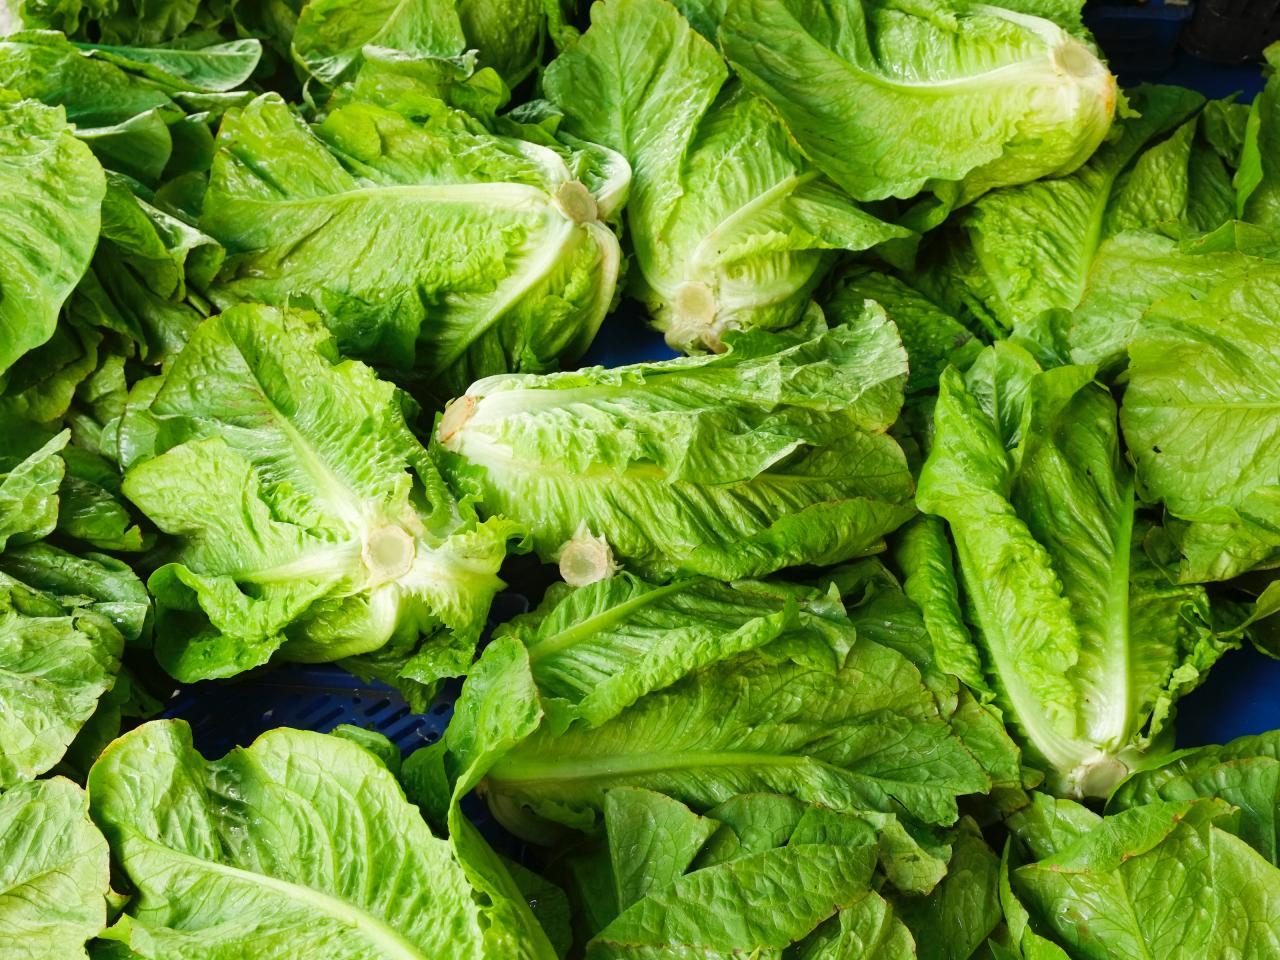 https://food.fnr.sndimg.com/content/dam/images/food/fullset/2020/03/23/FN_stock-art-getty-romaine-lettuce_s6x4.jpg.rend.hgtvcom.1280.960.suffix/1584990138440.jpeg